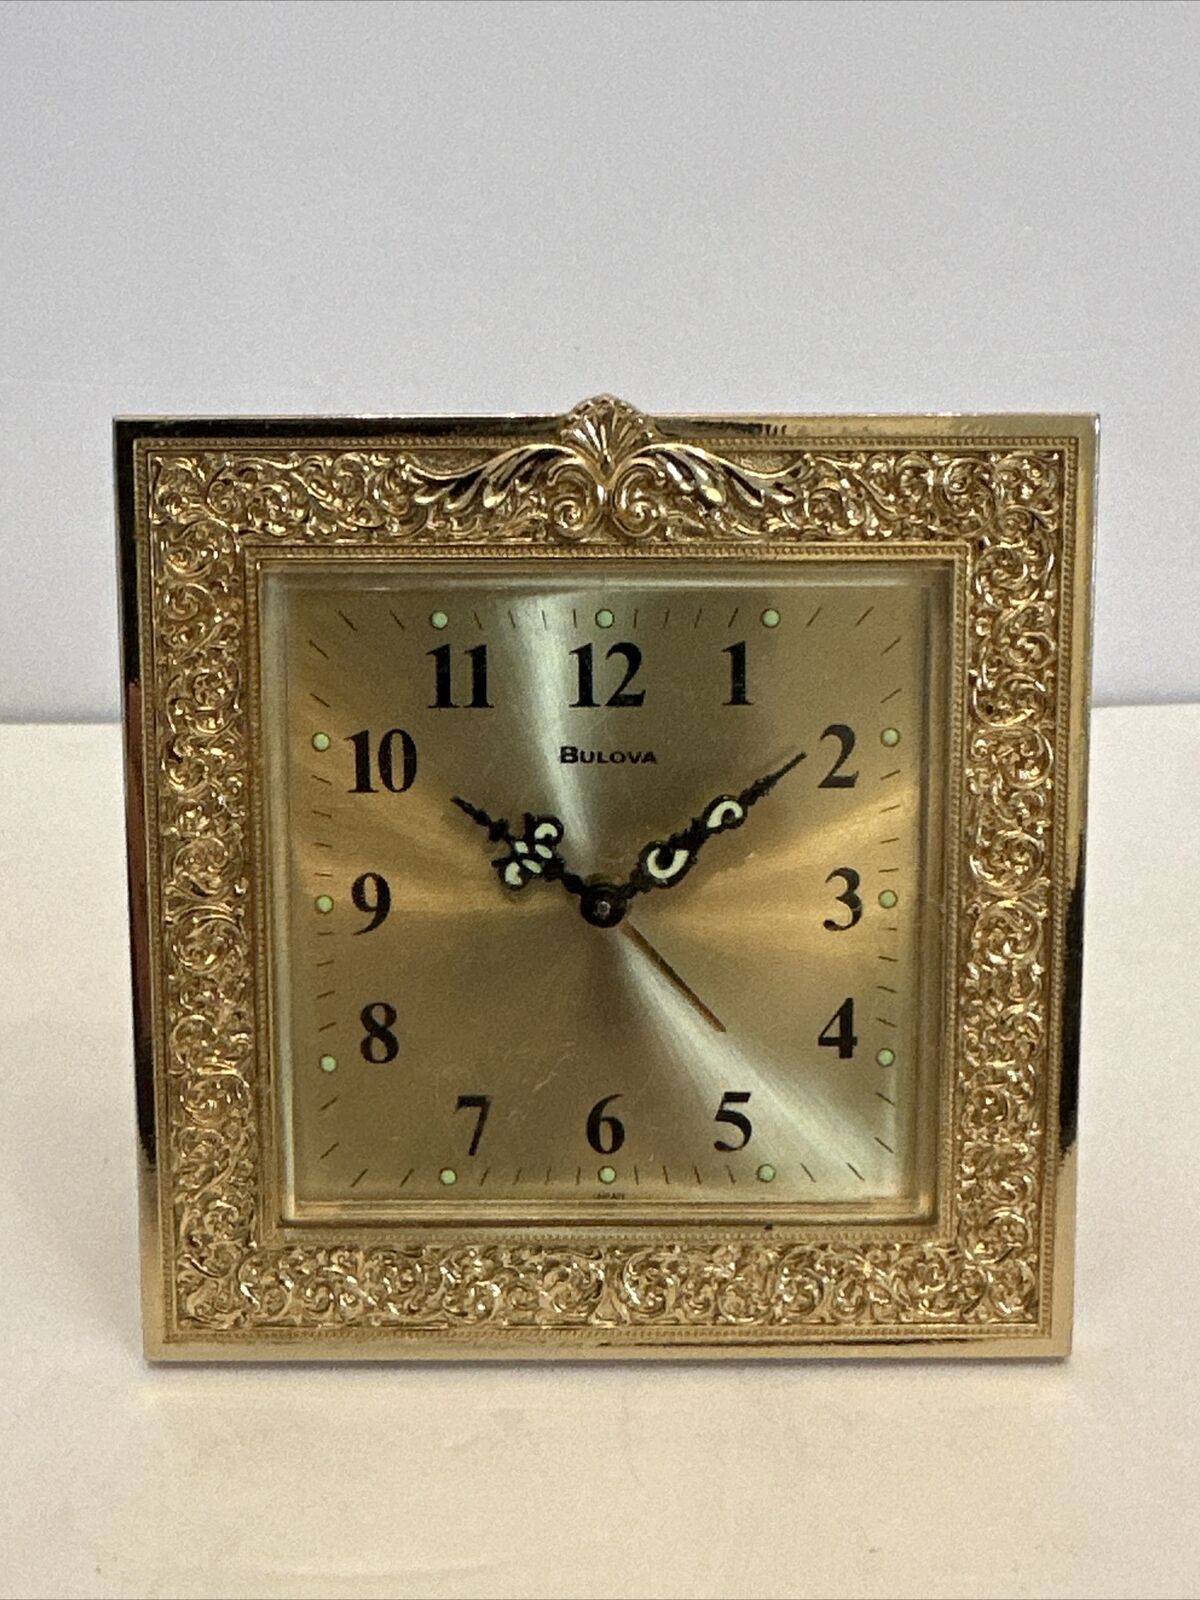 Bulova Alarm Clock Desk/Table Alarm Clock Etched Frame Brassy Gold Finish Color